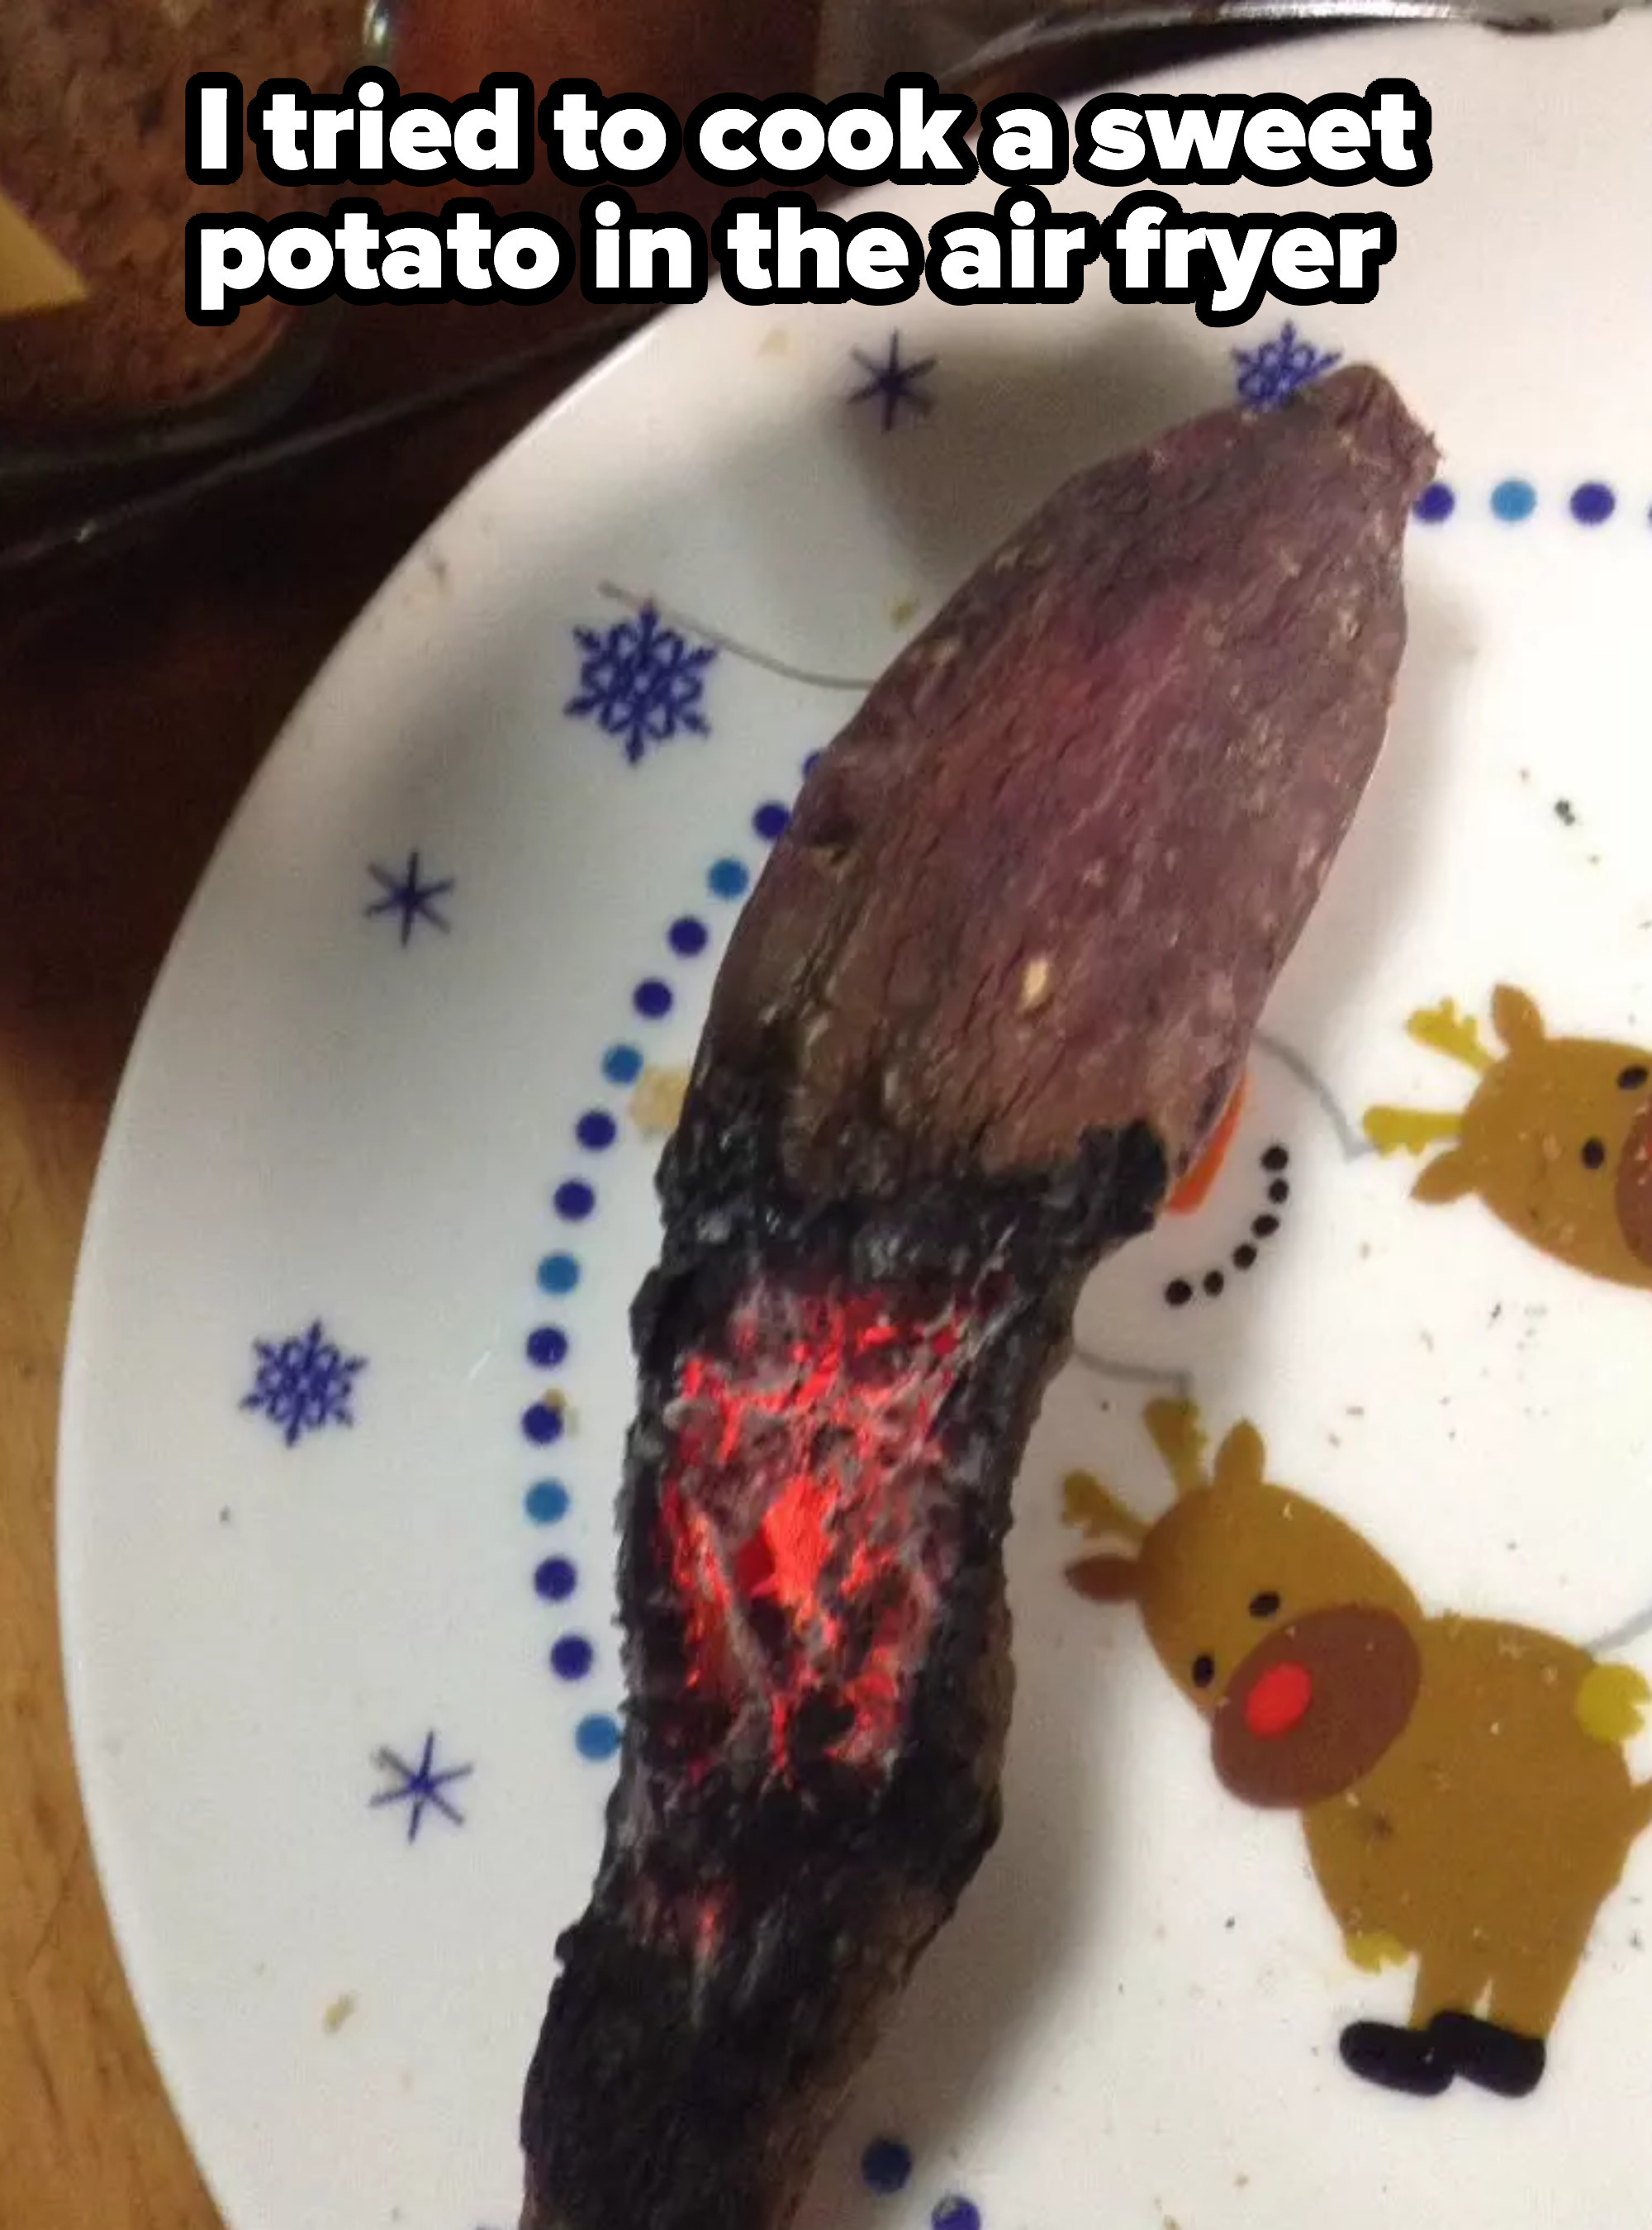 sweet potato burning red hot like a coal